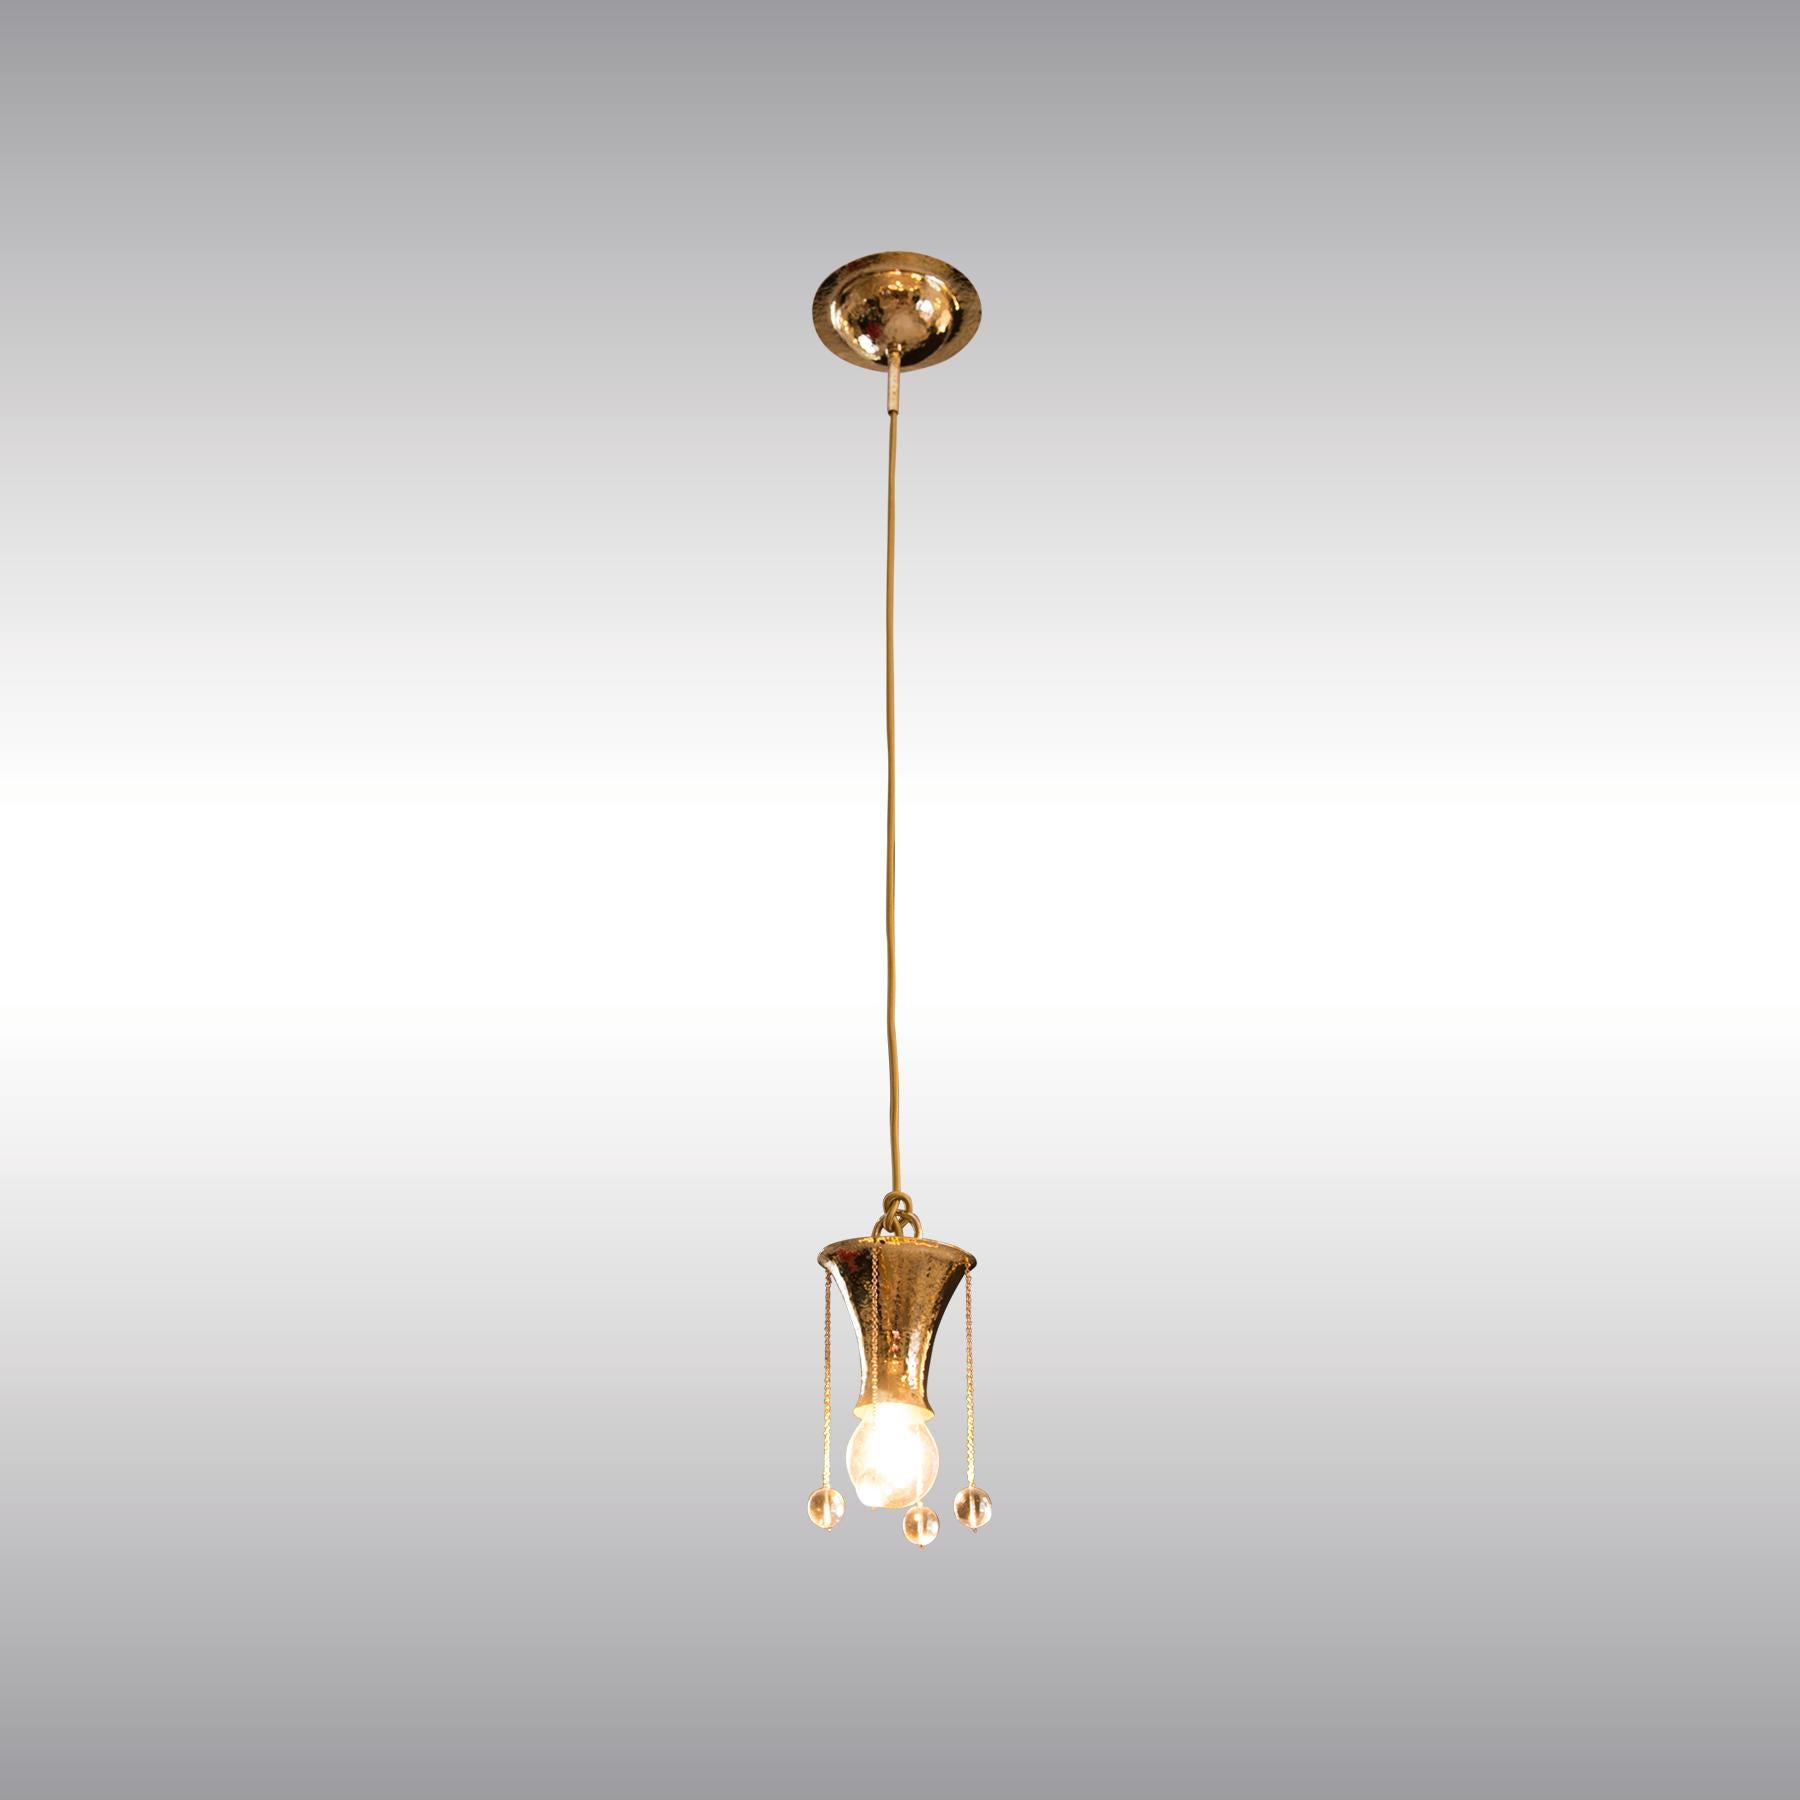 Jugendstil Hanging Lamp from the showroom of the Wiener Werkstaette used by Josef Hoffmann For Sale